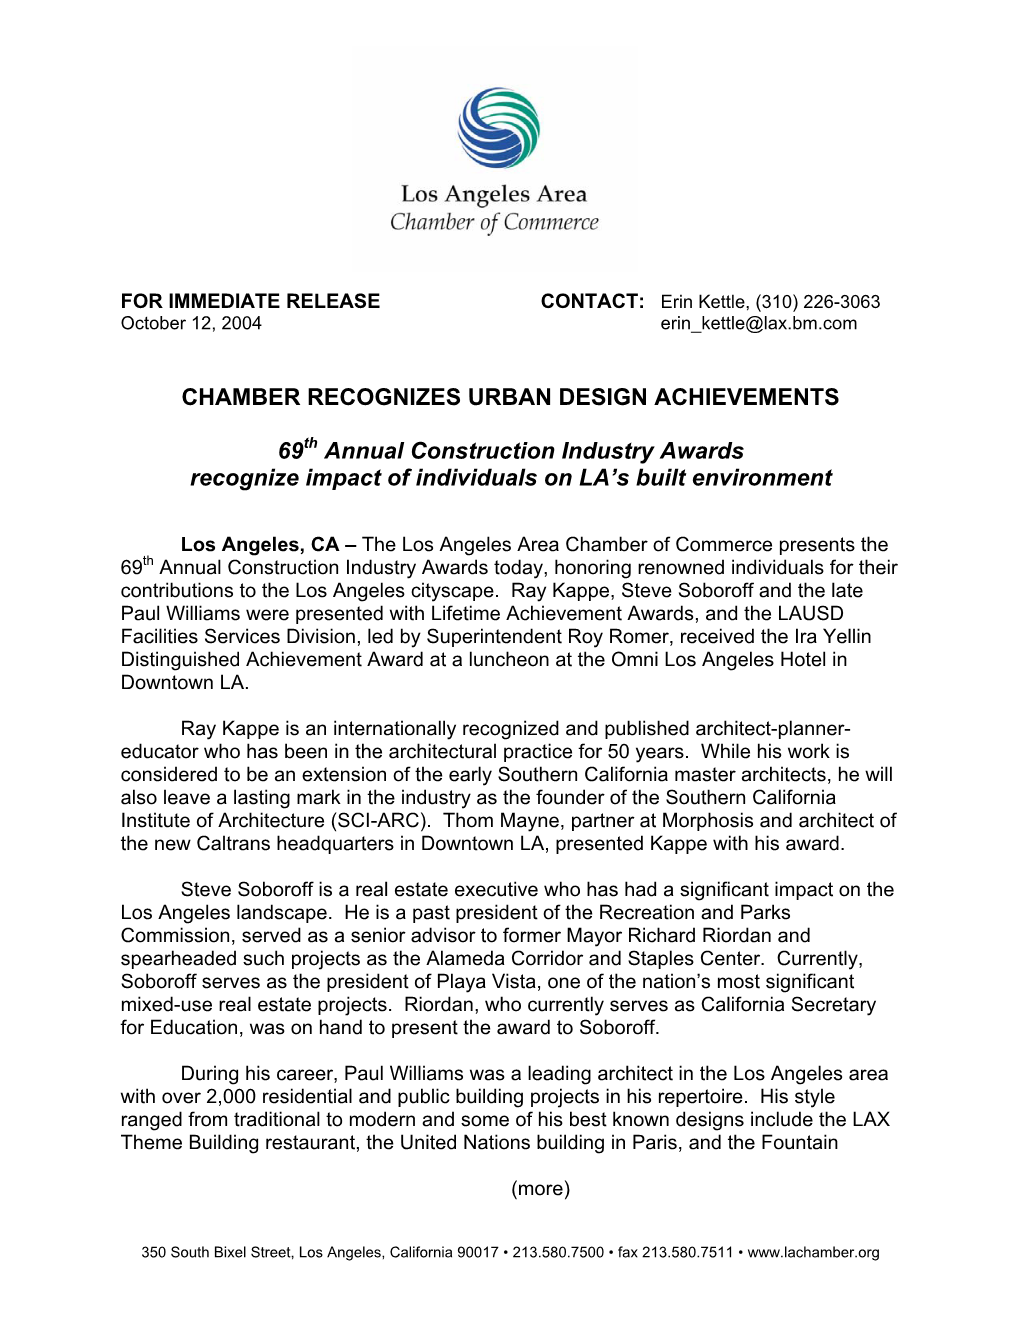 Chamber Recognizes Urban Design Achievements